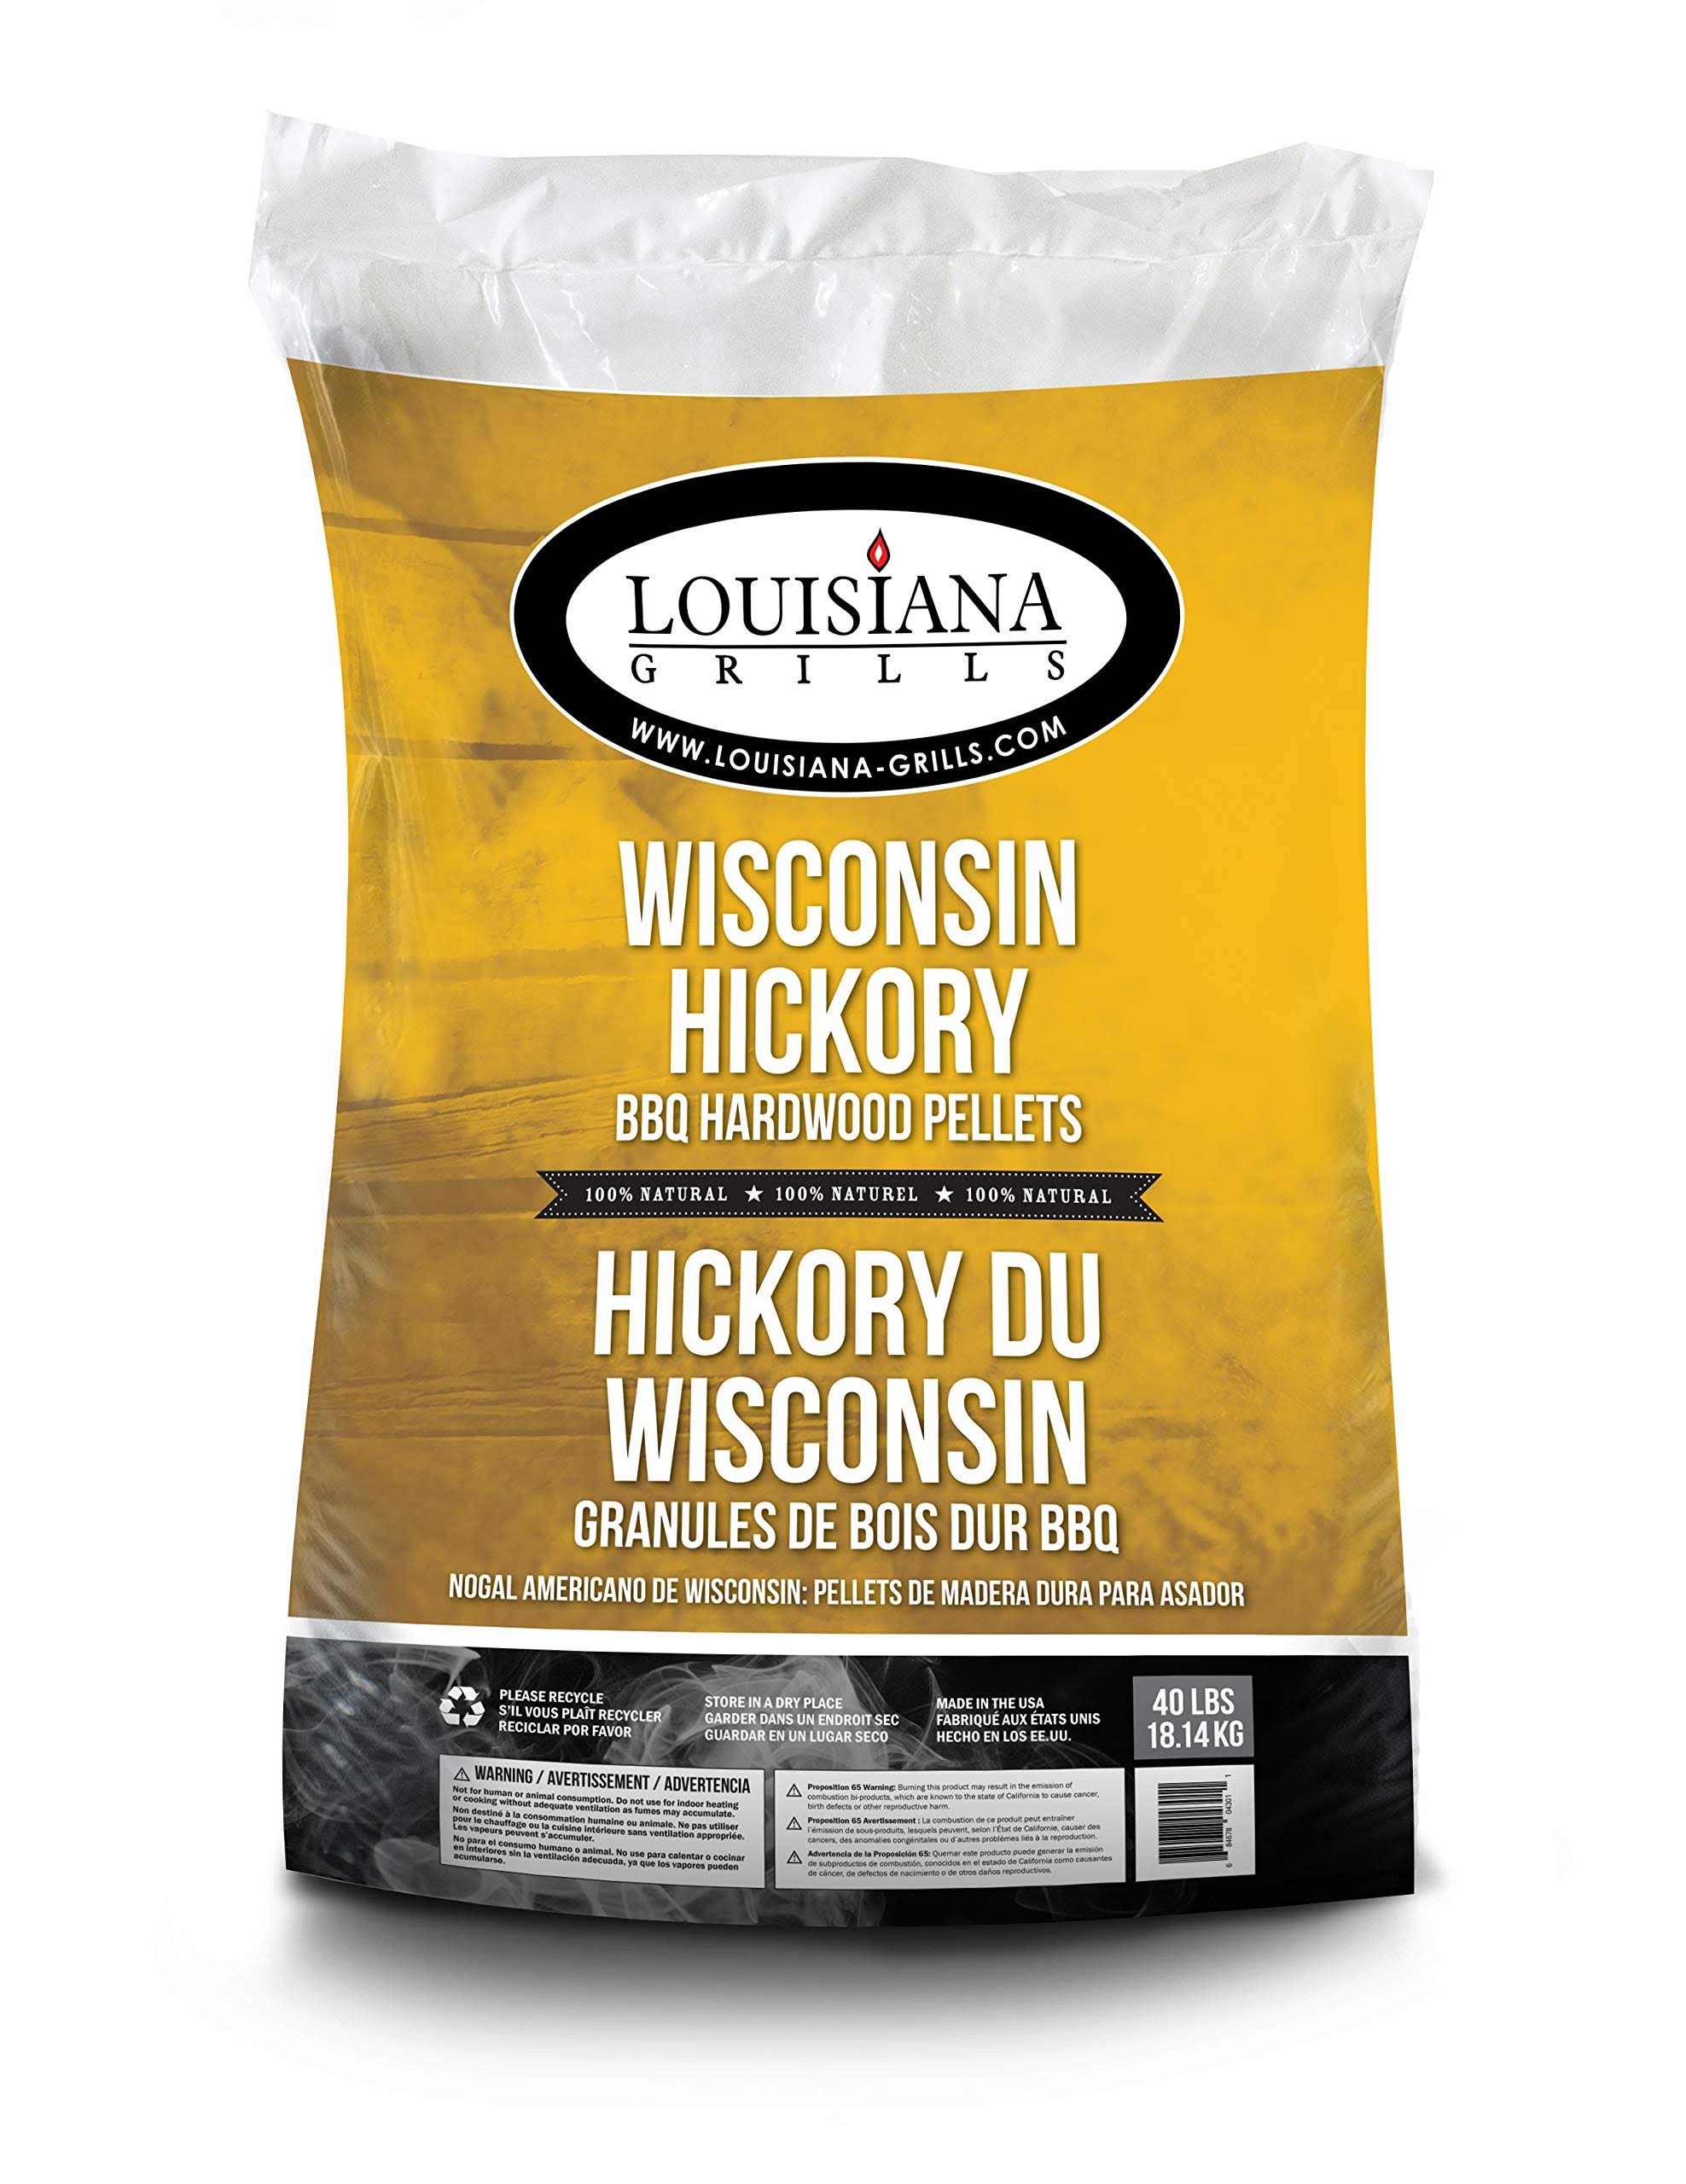 Louisiana Grills All Natural Hardwood Pellets - Wisconsin Hickory, 40lbs